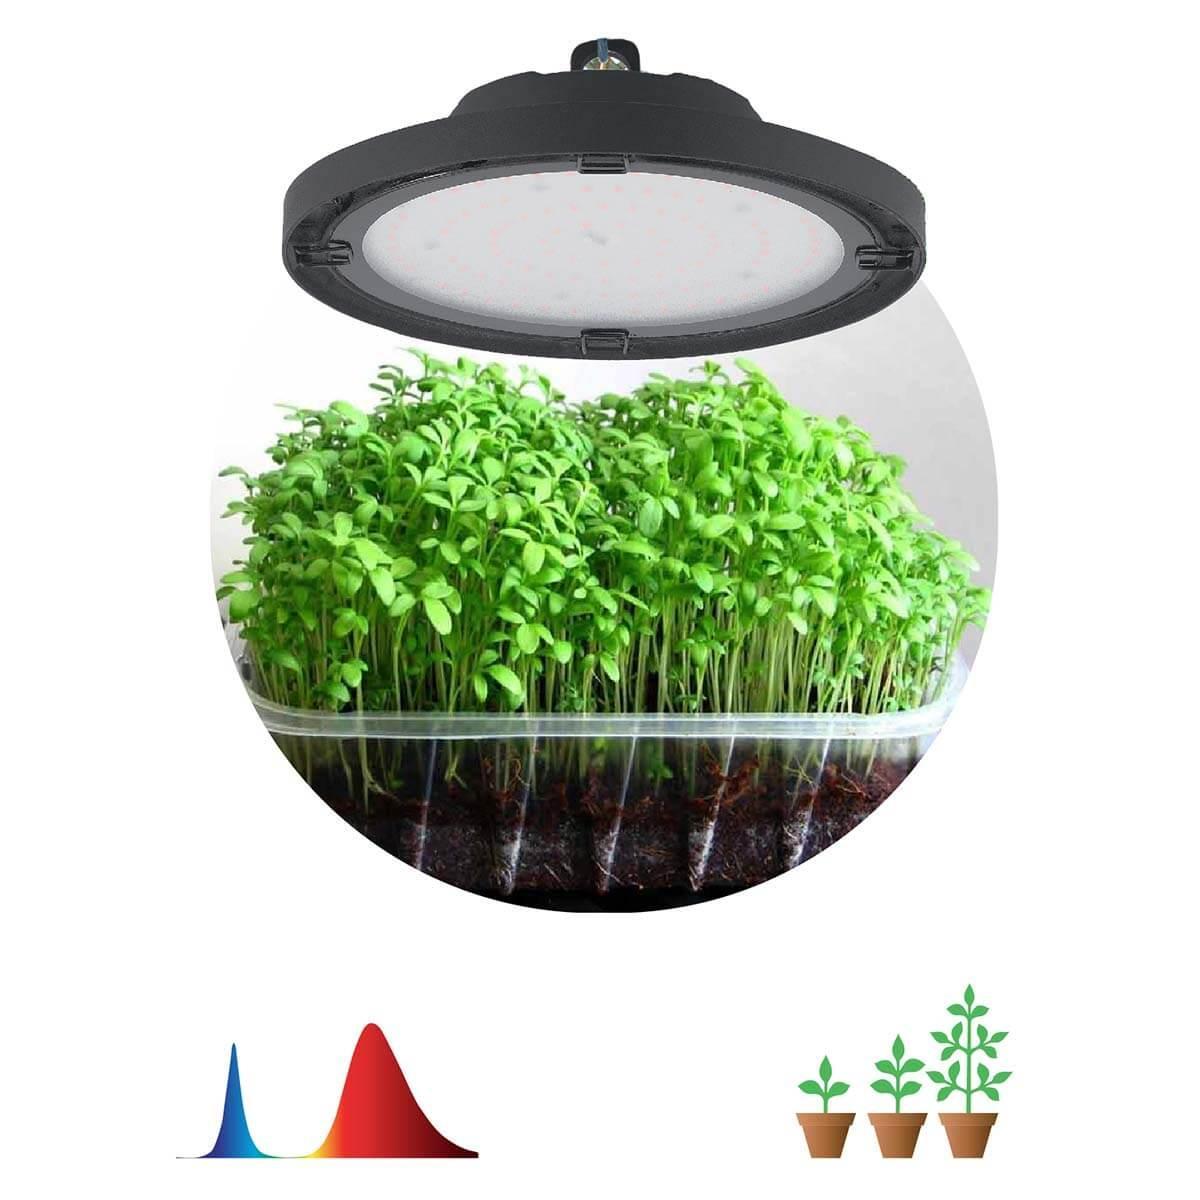 Прожектор светодиодный для растений ЭРА 50W 1310K Fito-50W-RB-Led-Ufo Б0053280 прожектор светодиодный для растений эра 50w 1310k fito 80w led qb б0053285